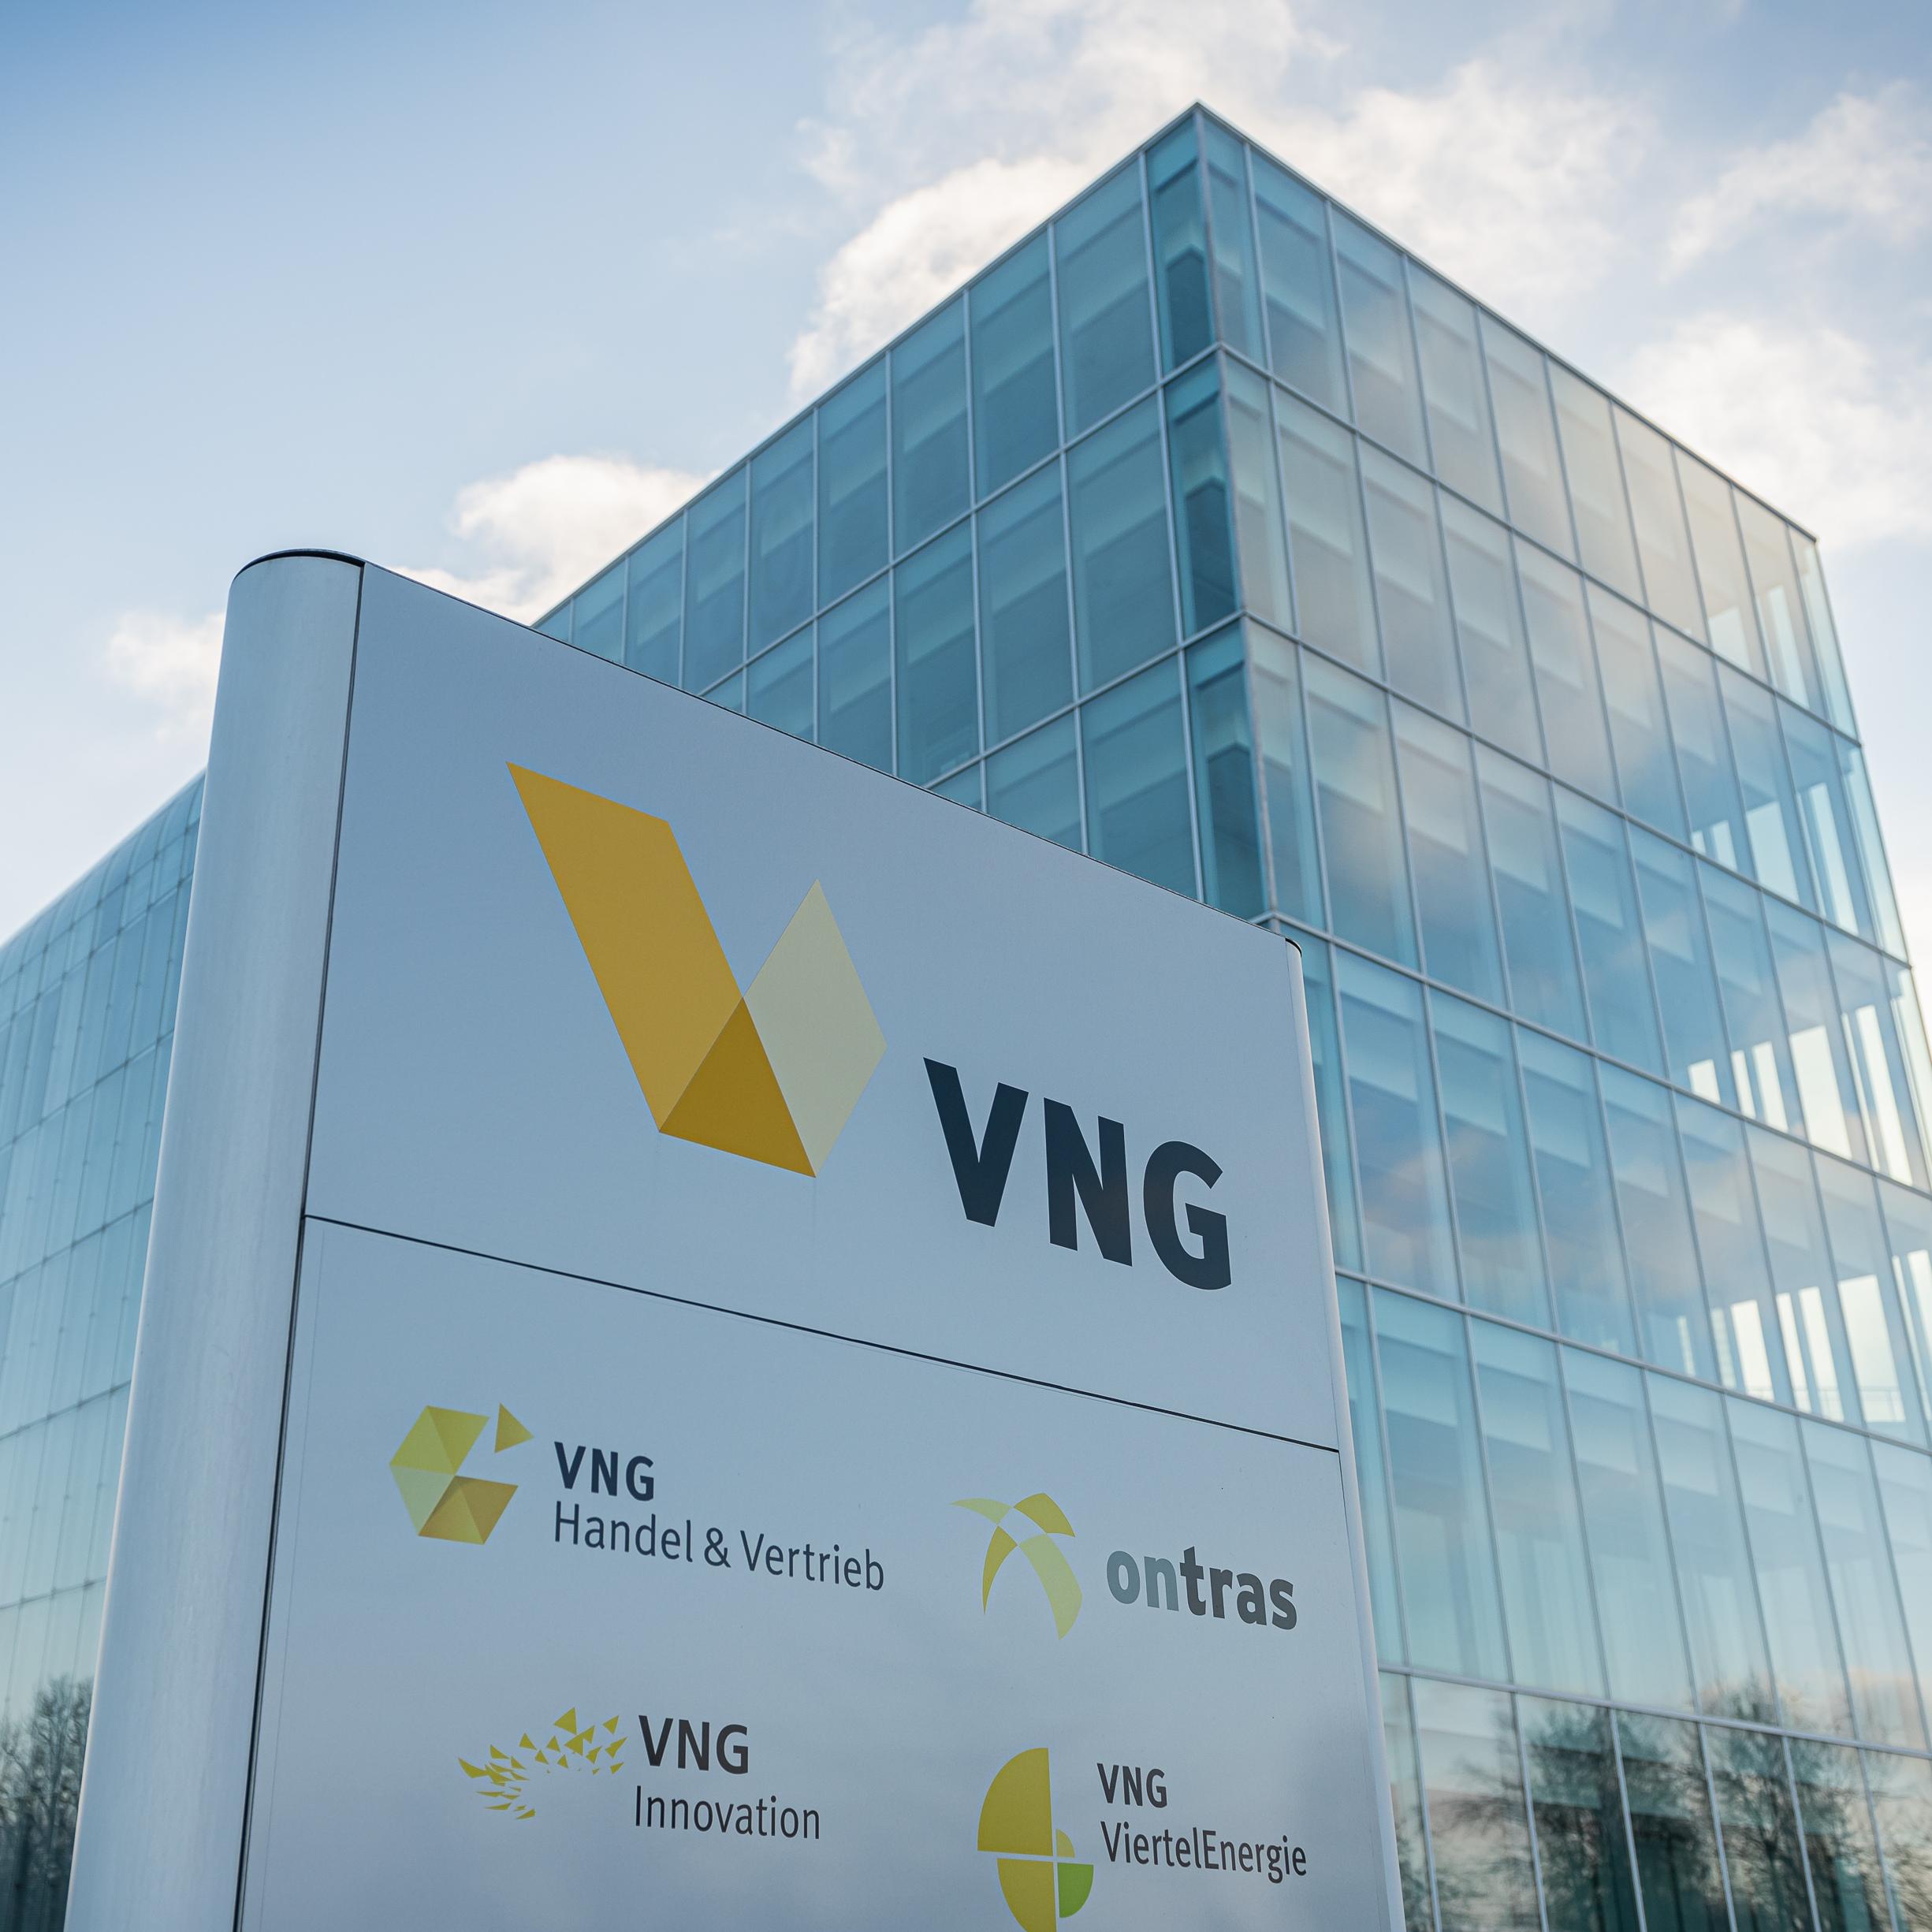 VNG Hauptsitz in Leipzig